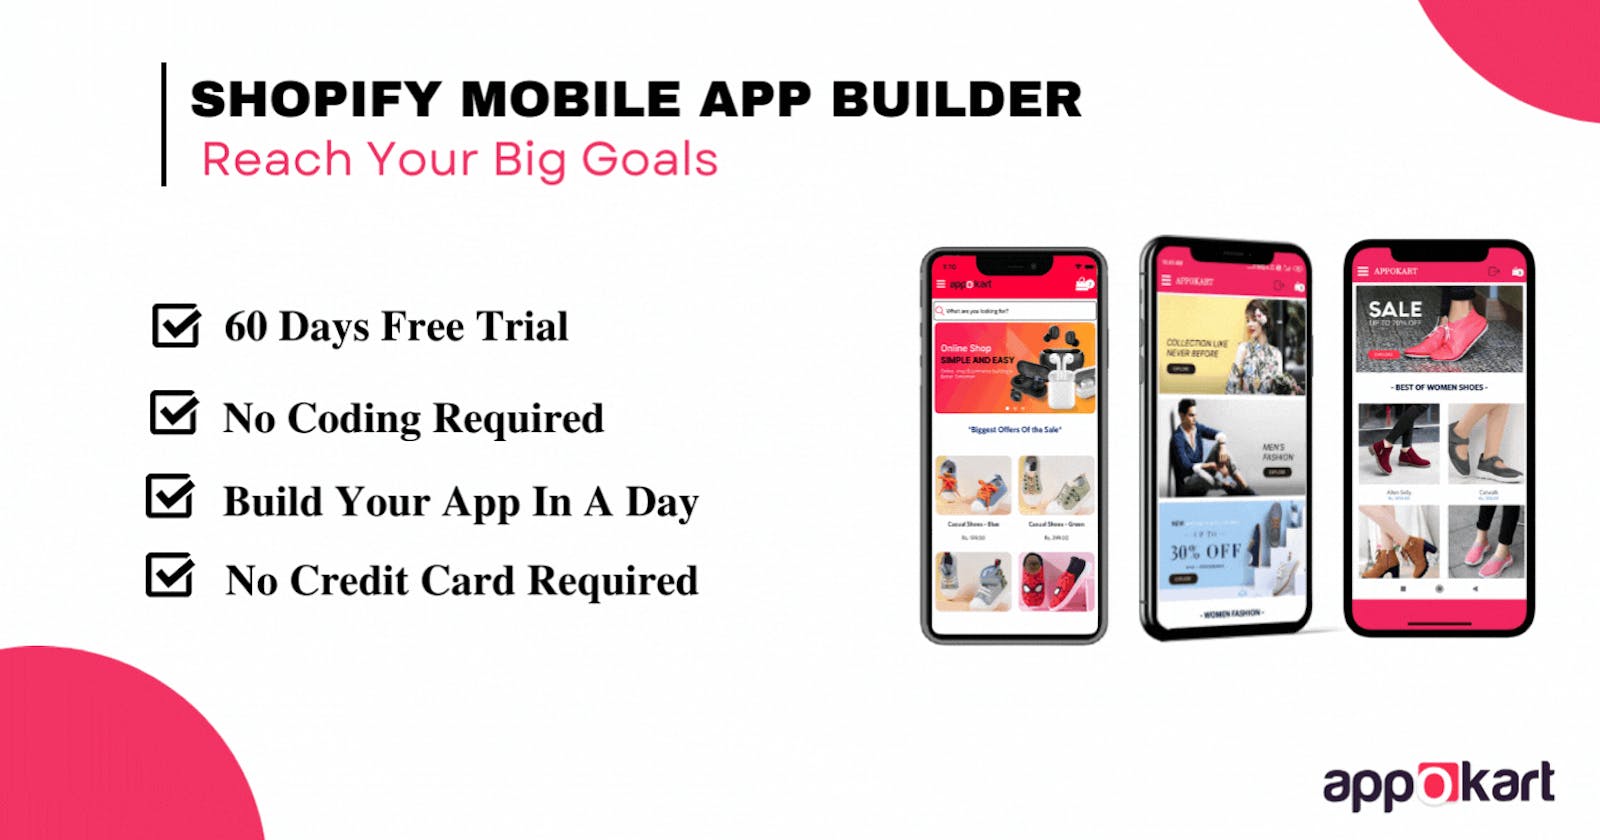 Shopify Mobile App Builder For E-Commerce Businesses